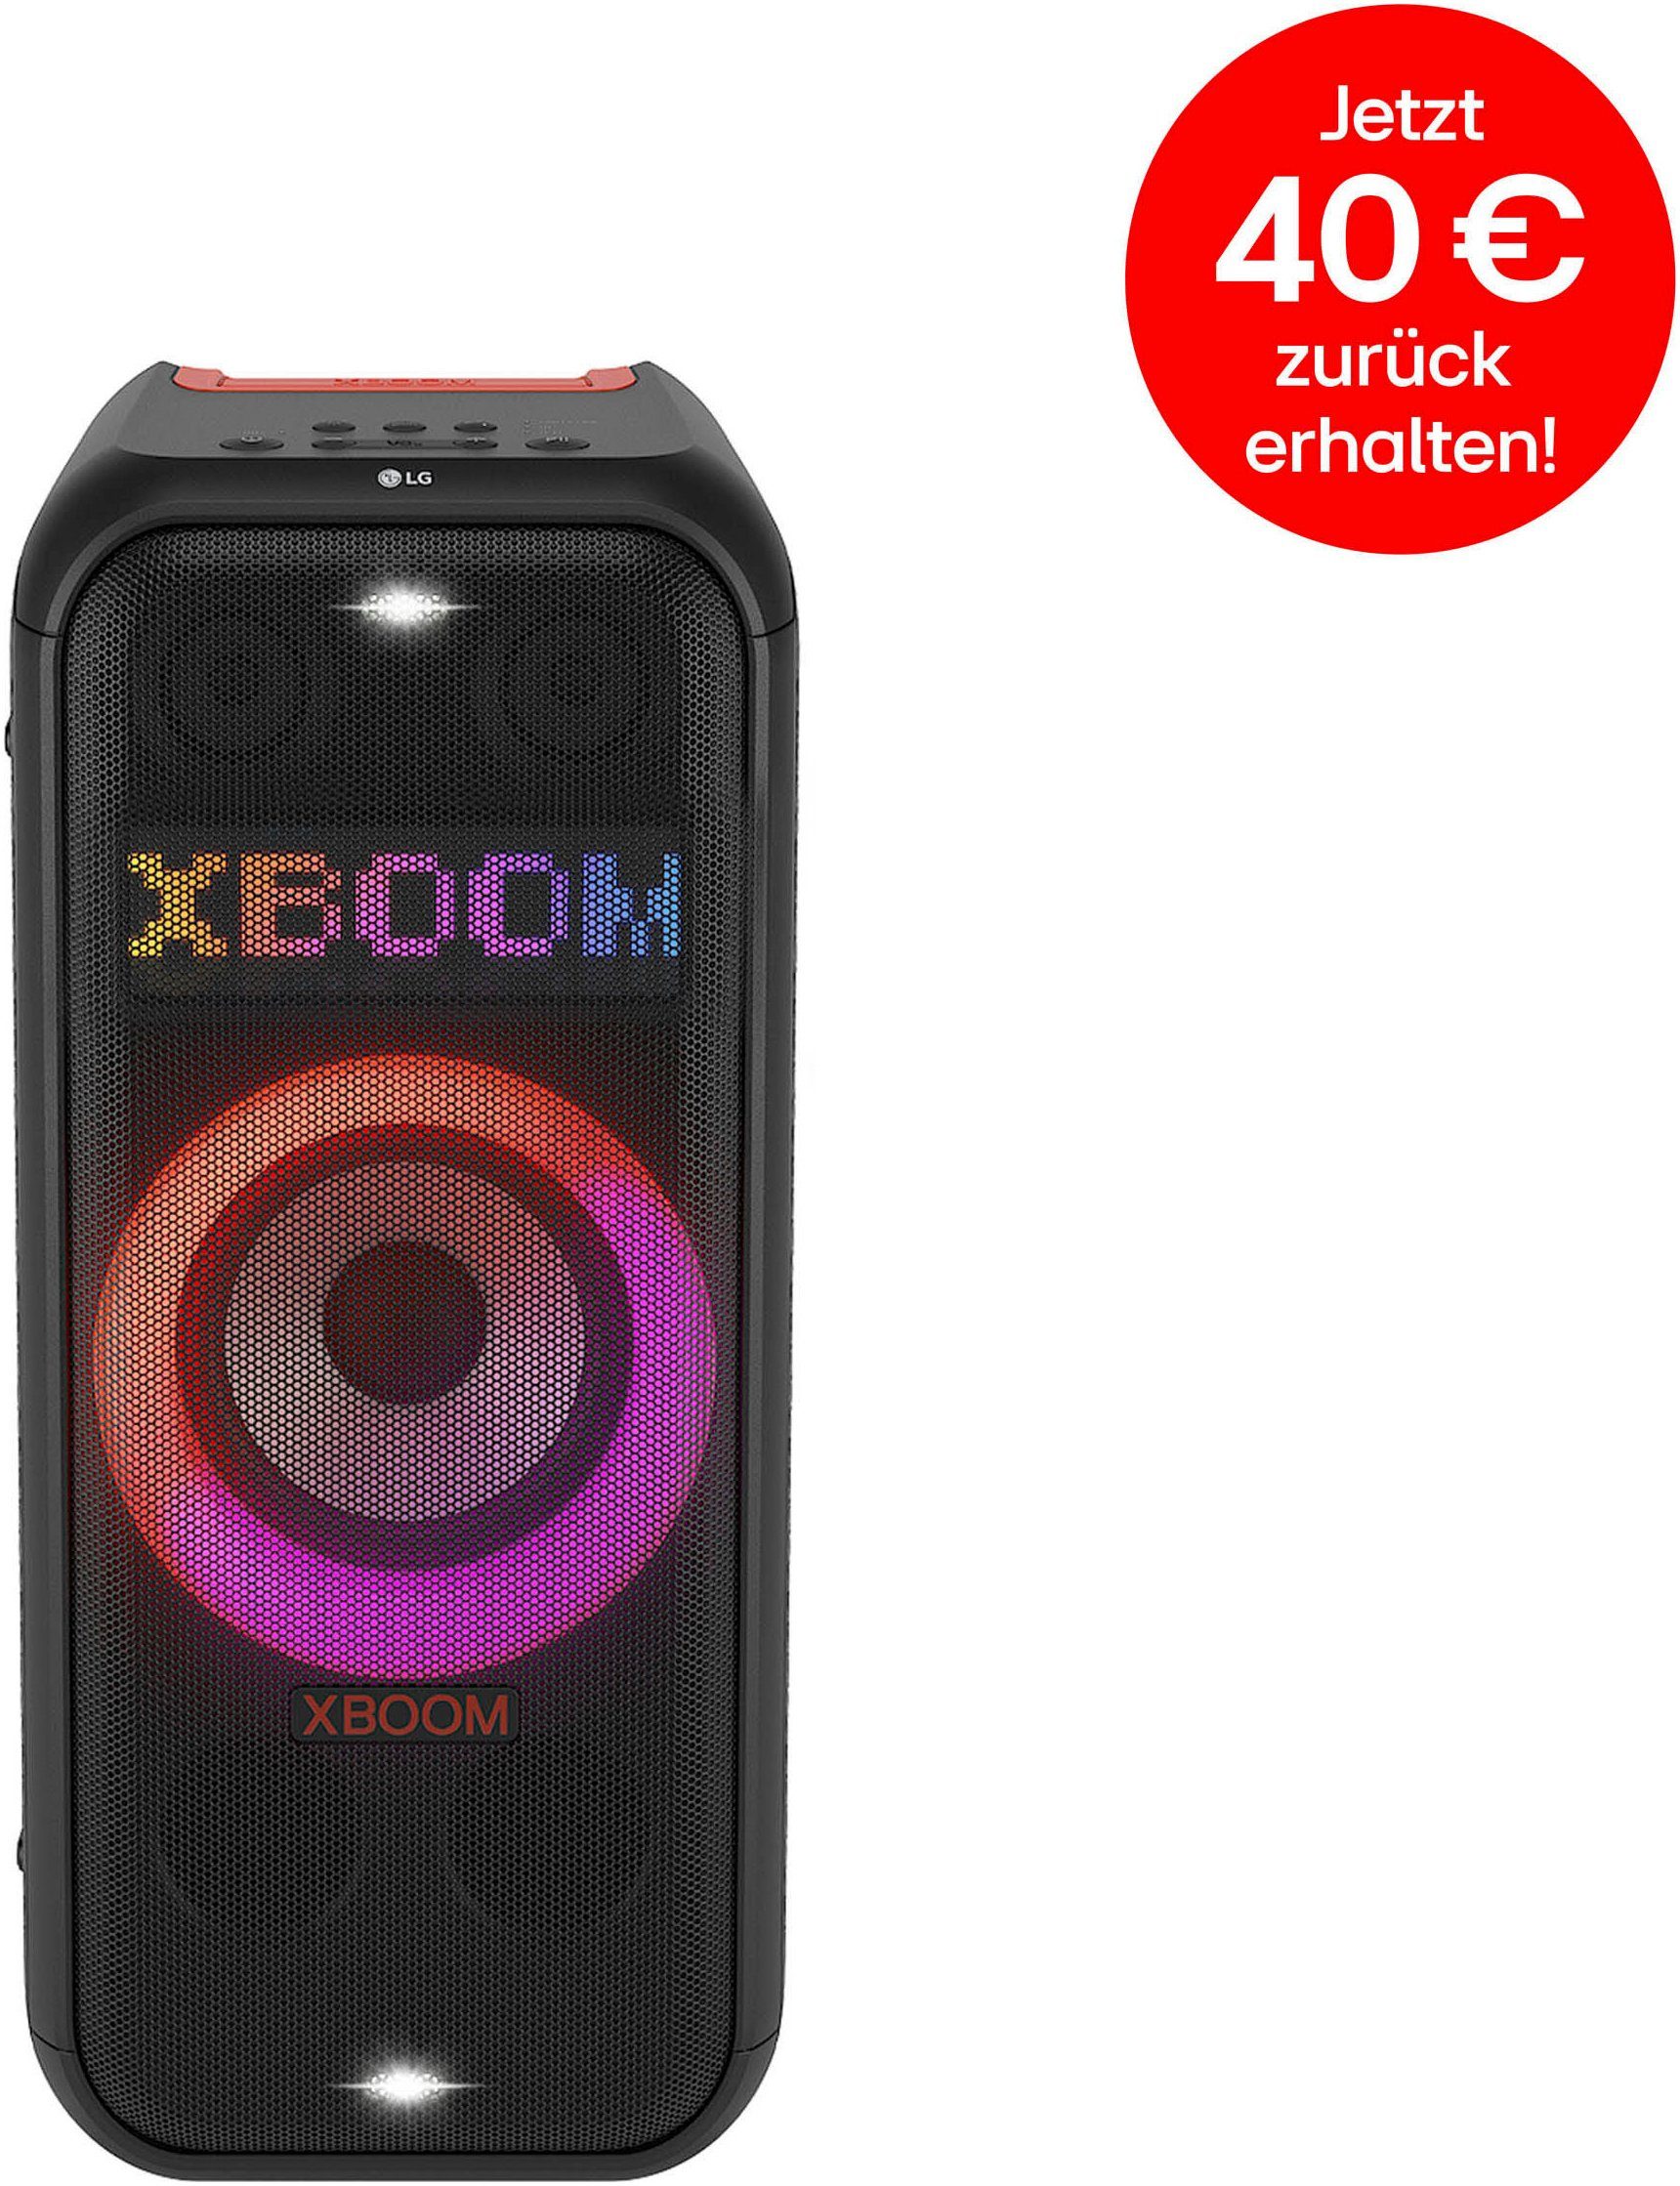 LG XBOOM XL7S 2.1 Lautsprecher (Bluetooth, 250 W), Kompatibel zur LG App;  Partybeleuchtung mit LED Panel; enthält Equalizer-Modi